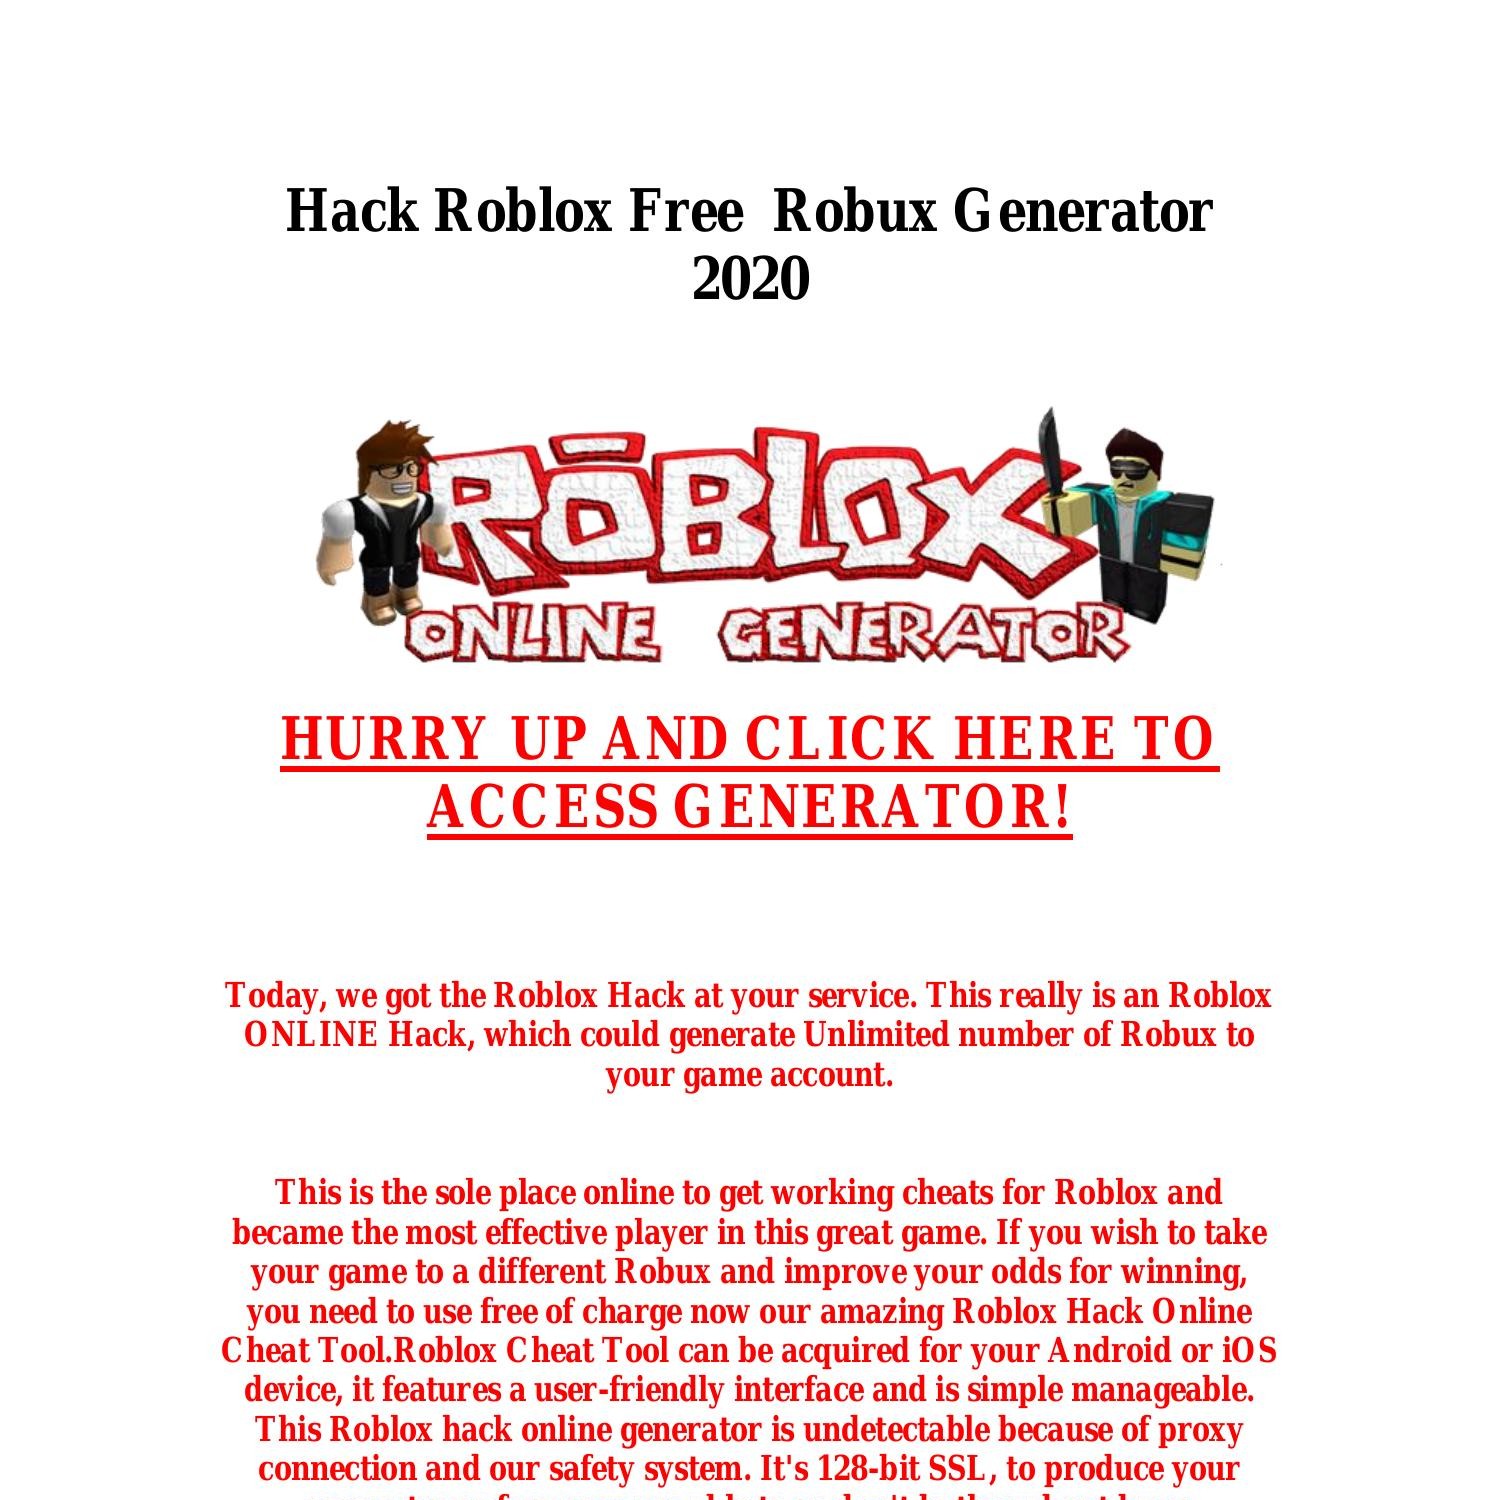 Hack Roblox Free Robux Generator 2020 Converted Pdf Docdroid - roblox hack roblox free robux